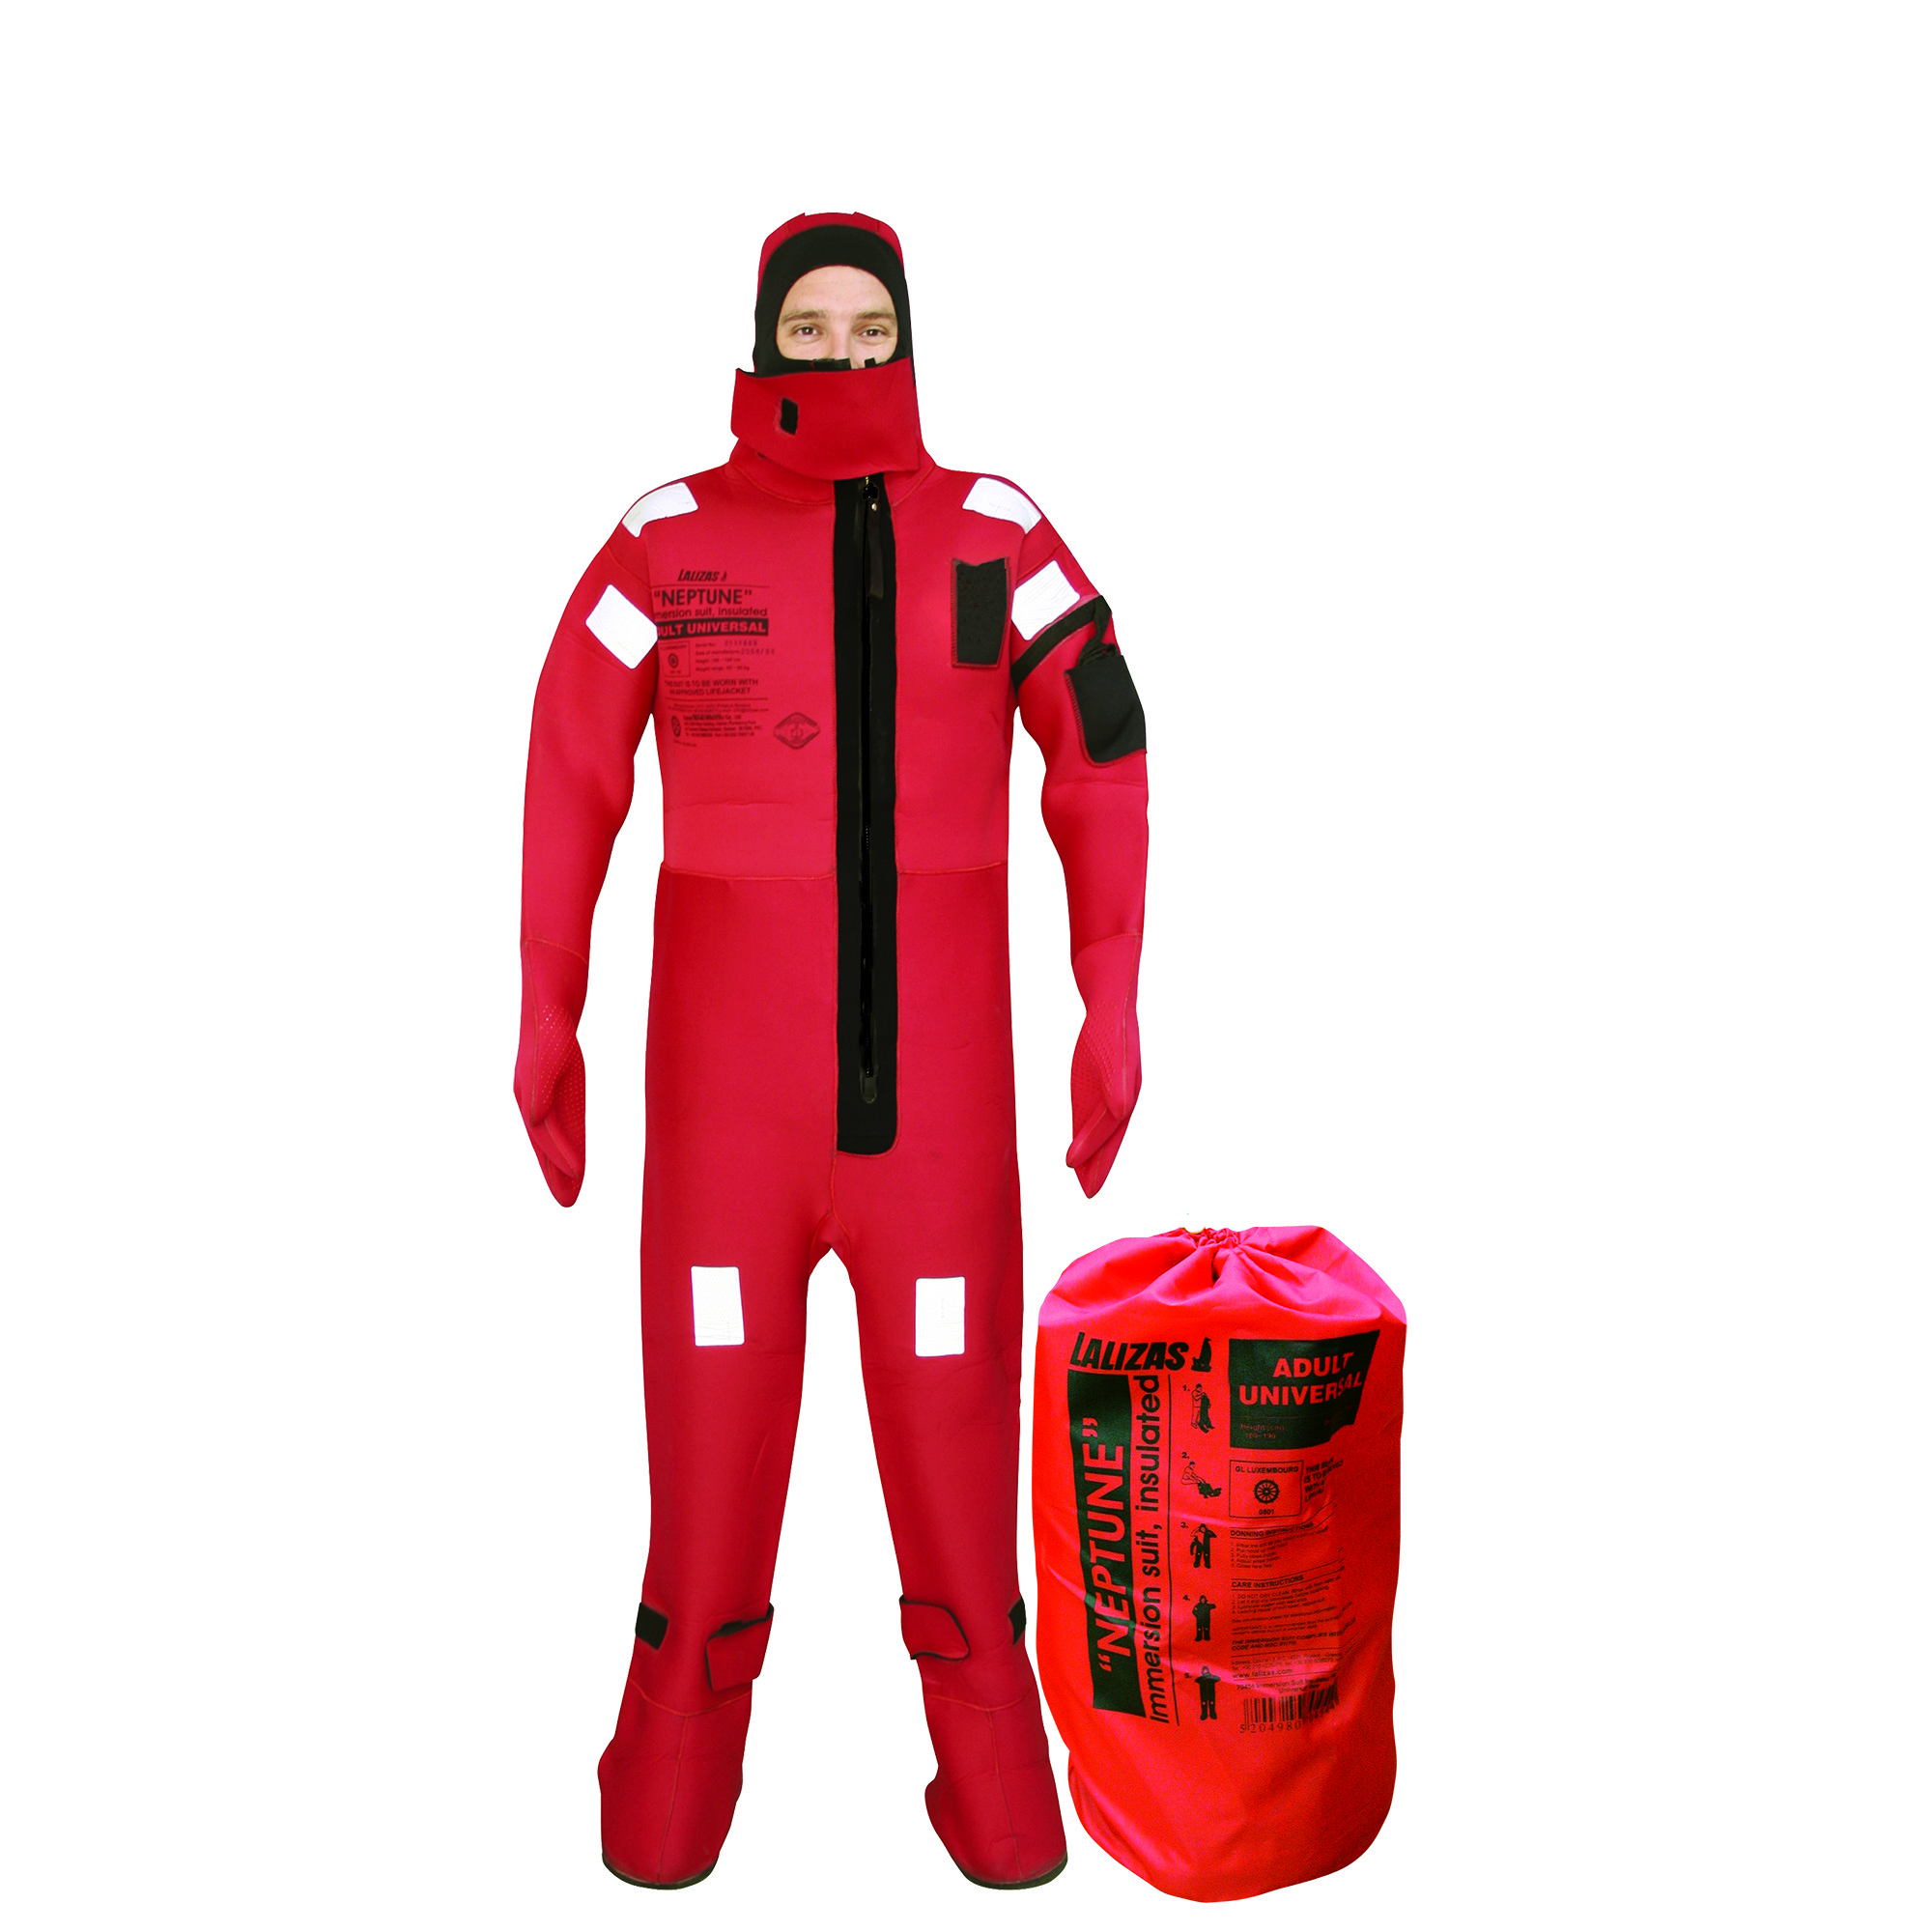 Гидрокостюм спасательный. Защитный – спасательный костюм lalizas Neptune – 70457. Гидрокостюм спасательный ГТКС-2004. Гидрокостюм спасательный судовой Immersion Suit. Lalizas Neptune 70454.